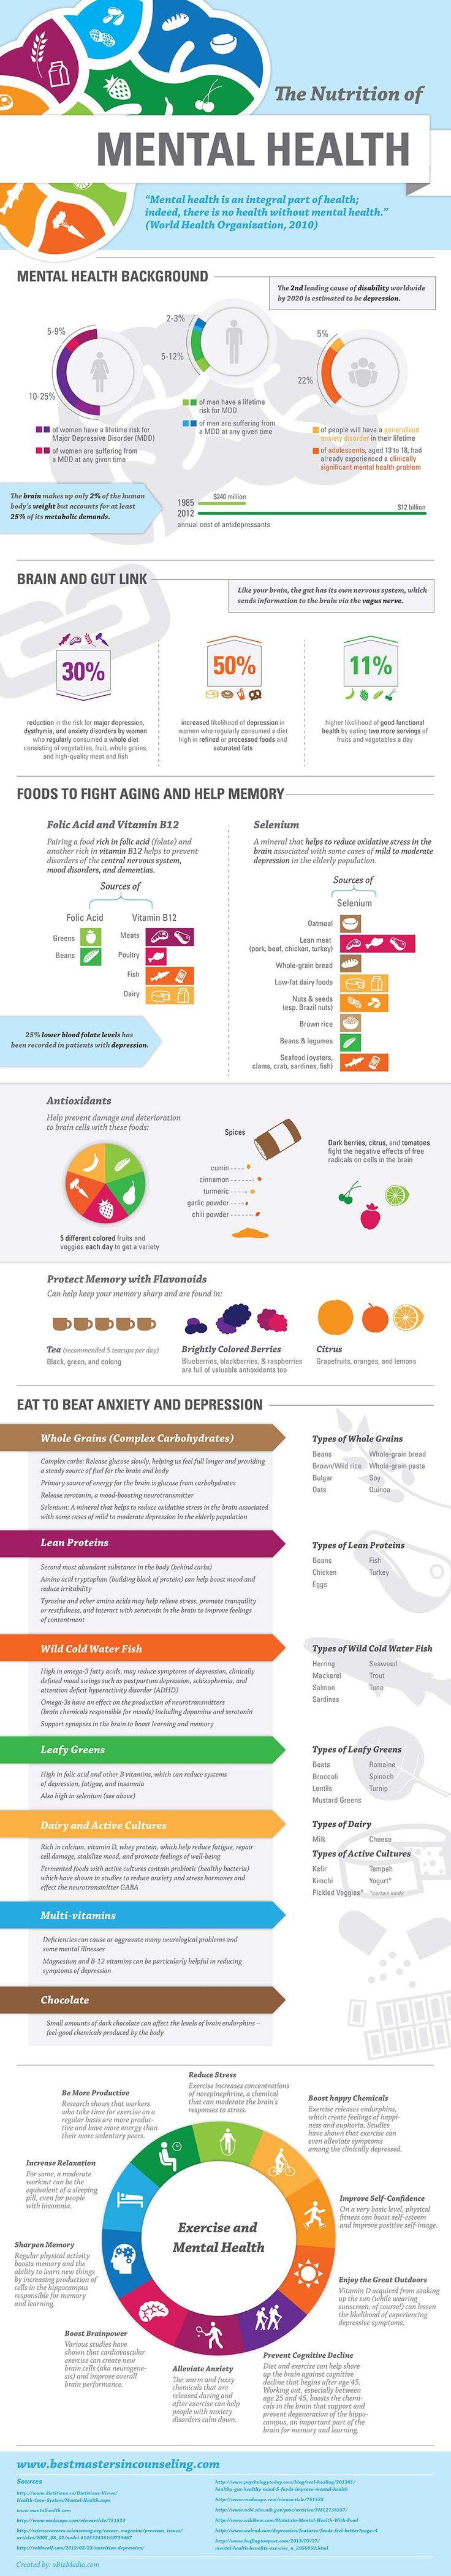 Hochzeit - Infographic: Nutrition For Mental Health